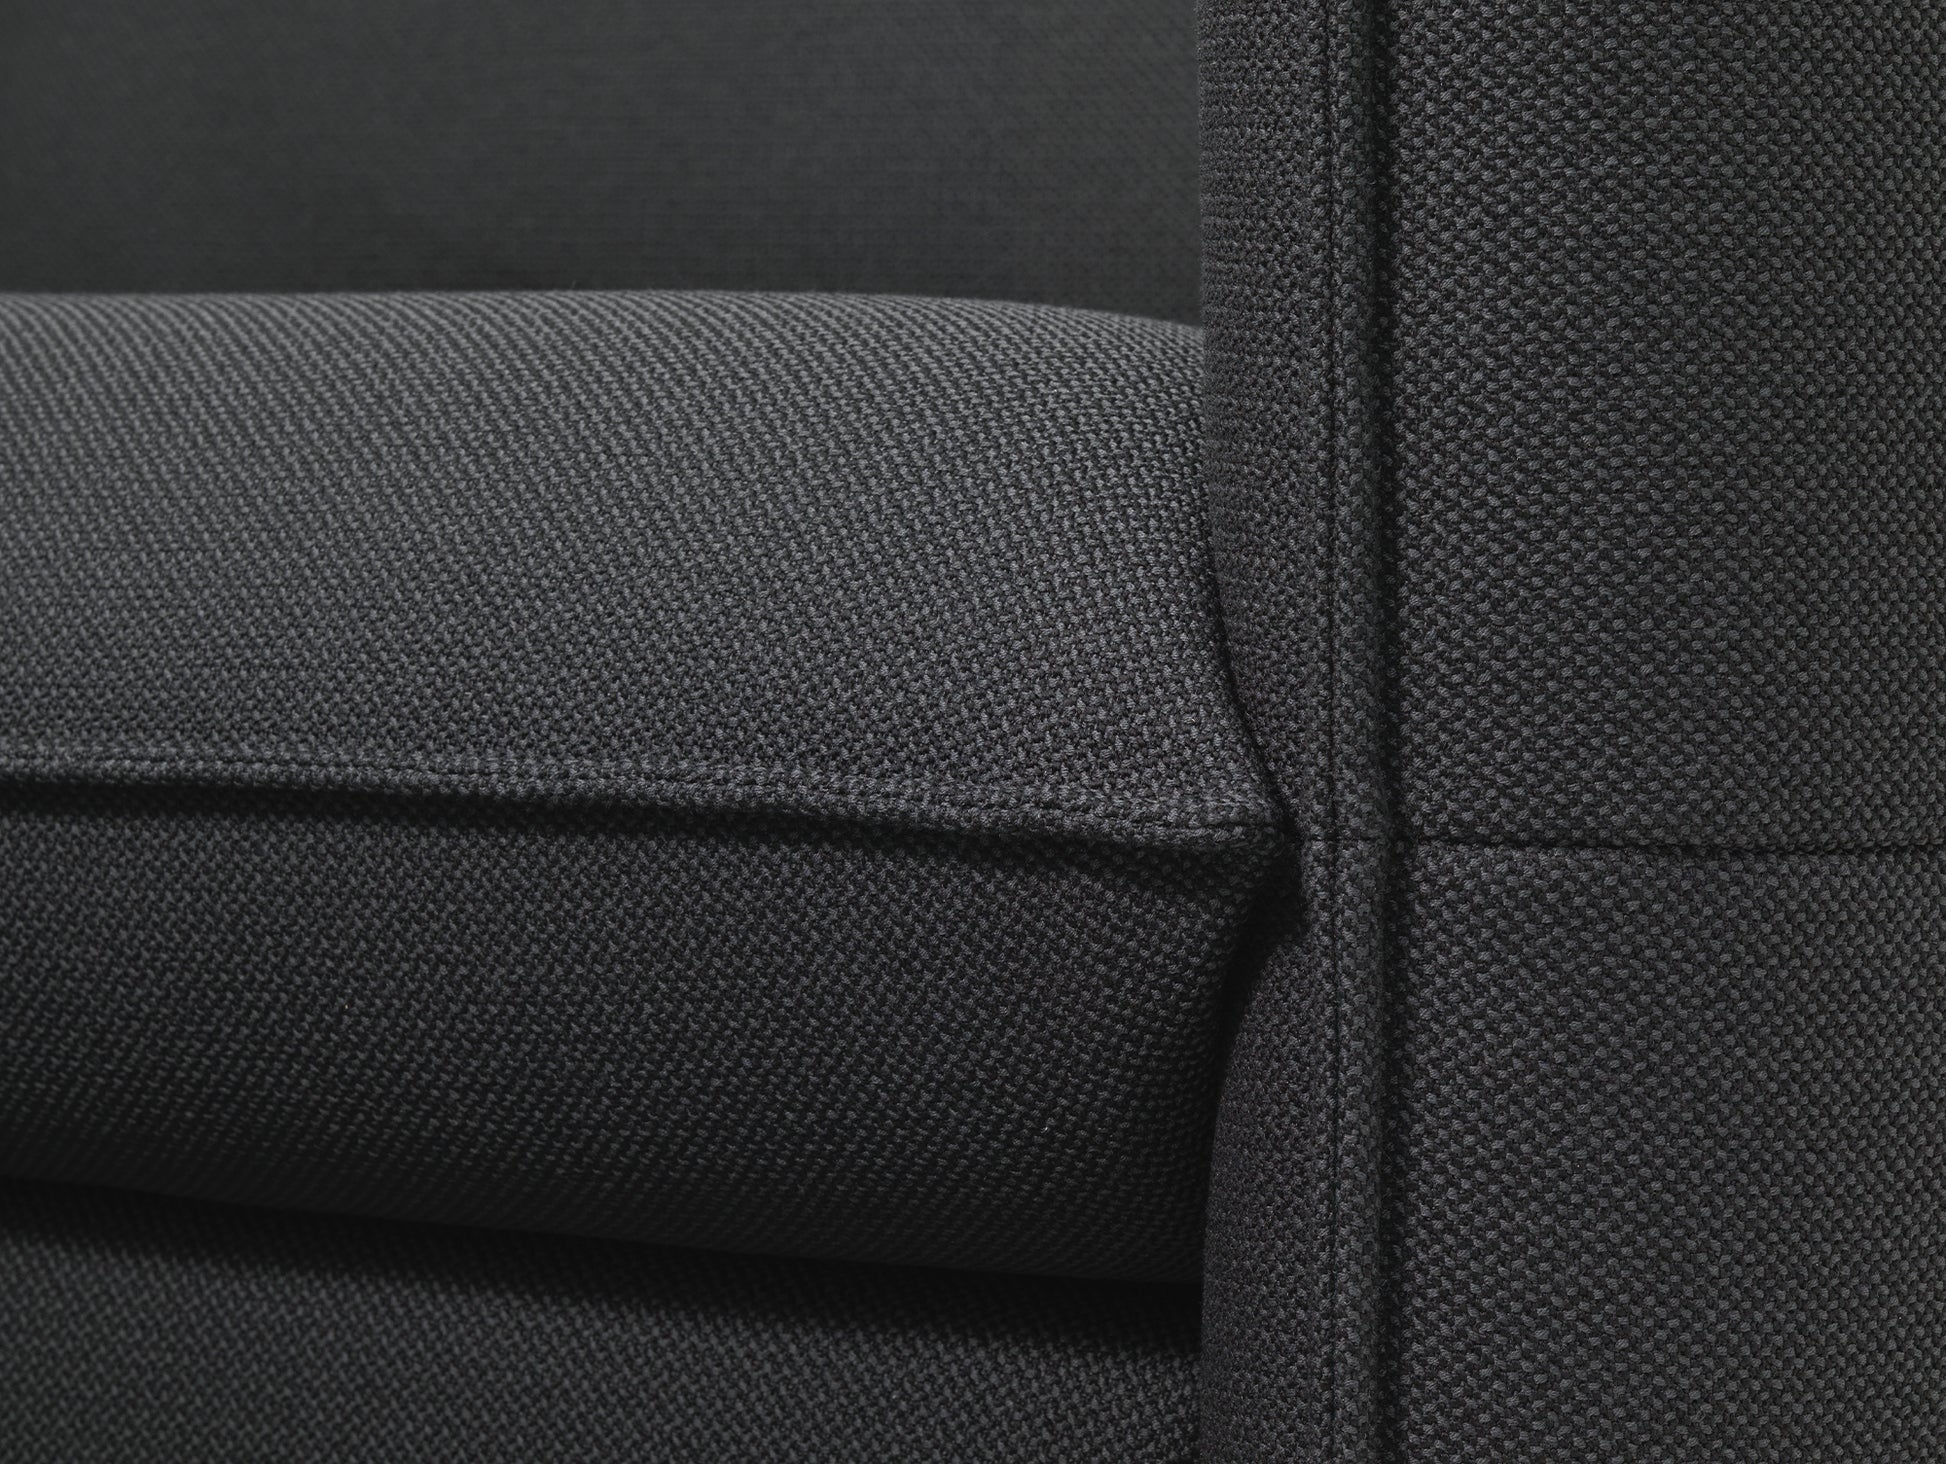 Mariposa 2-Seater Sofa by Vitra - Credo 08 Dark Blue Black (F120)